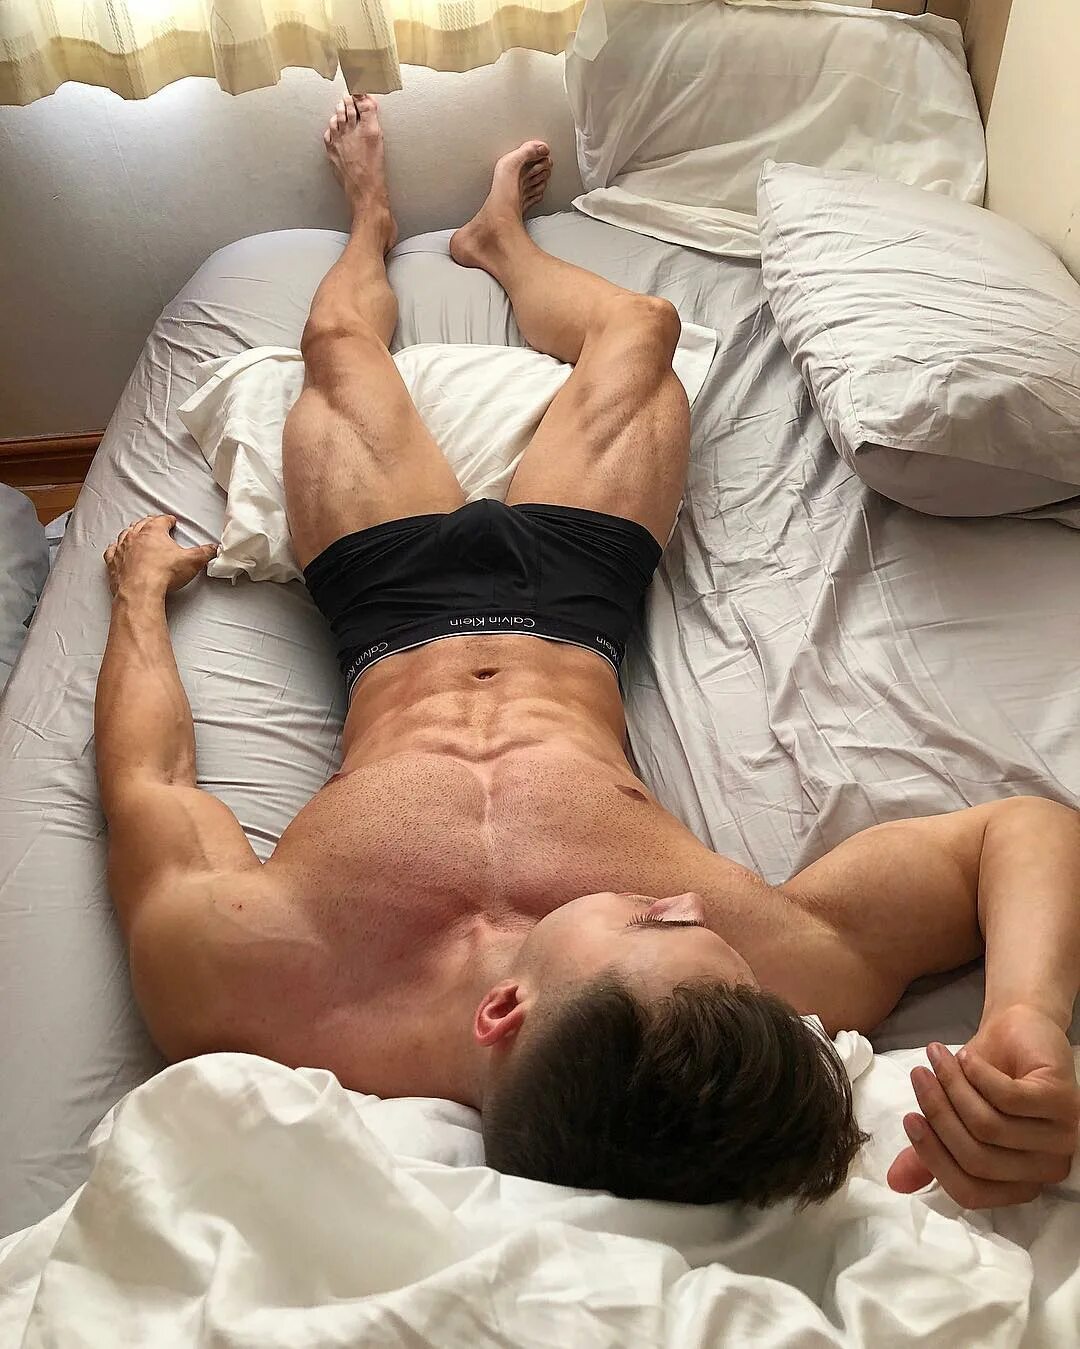 Brandon Harding’s Instagram post: "Current sleeping situation